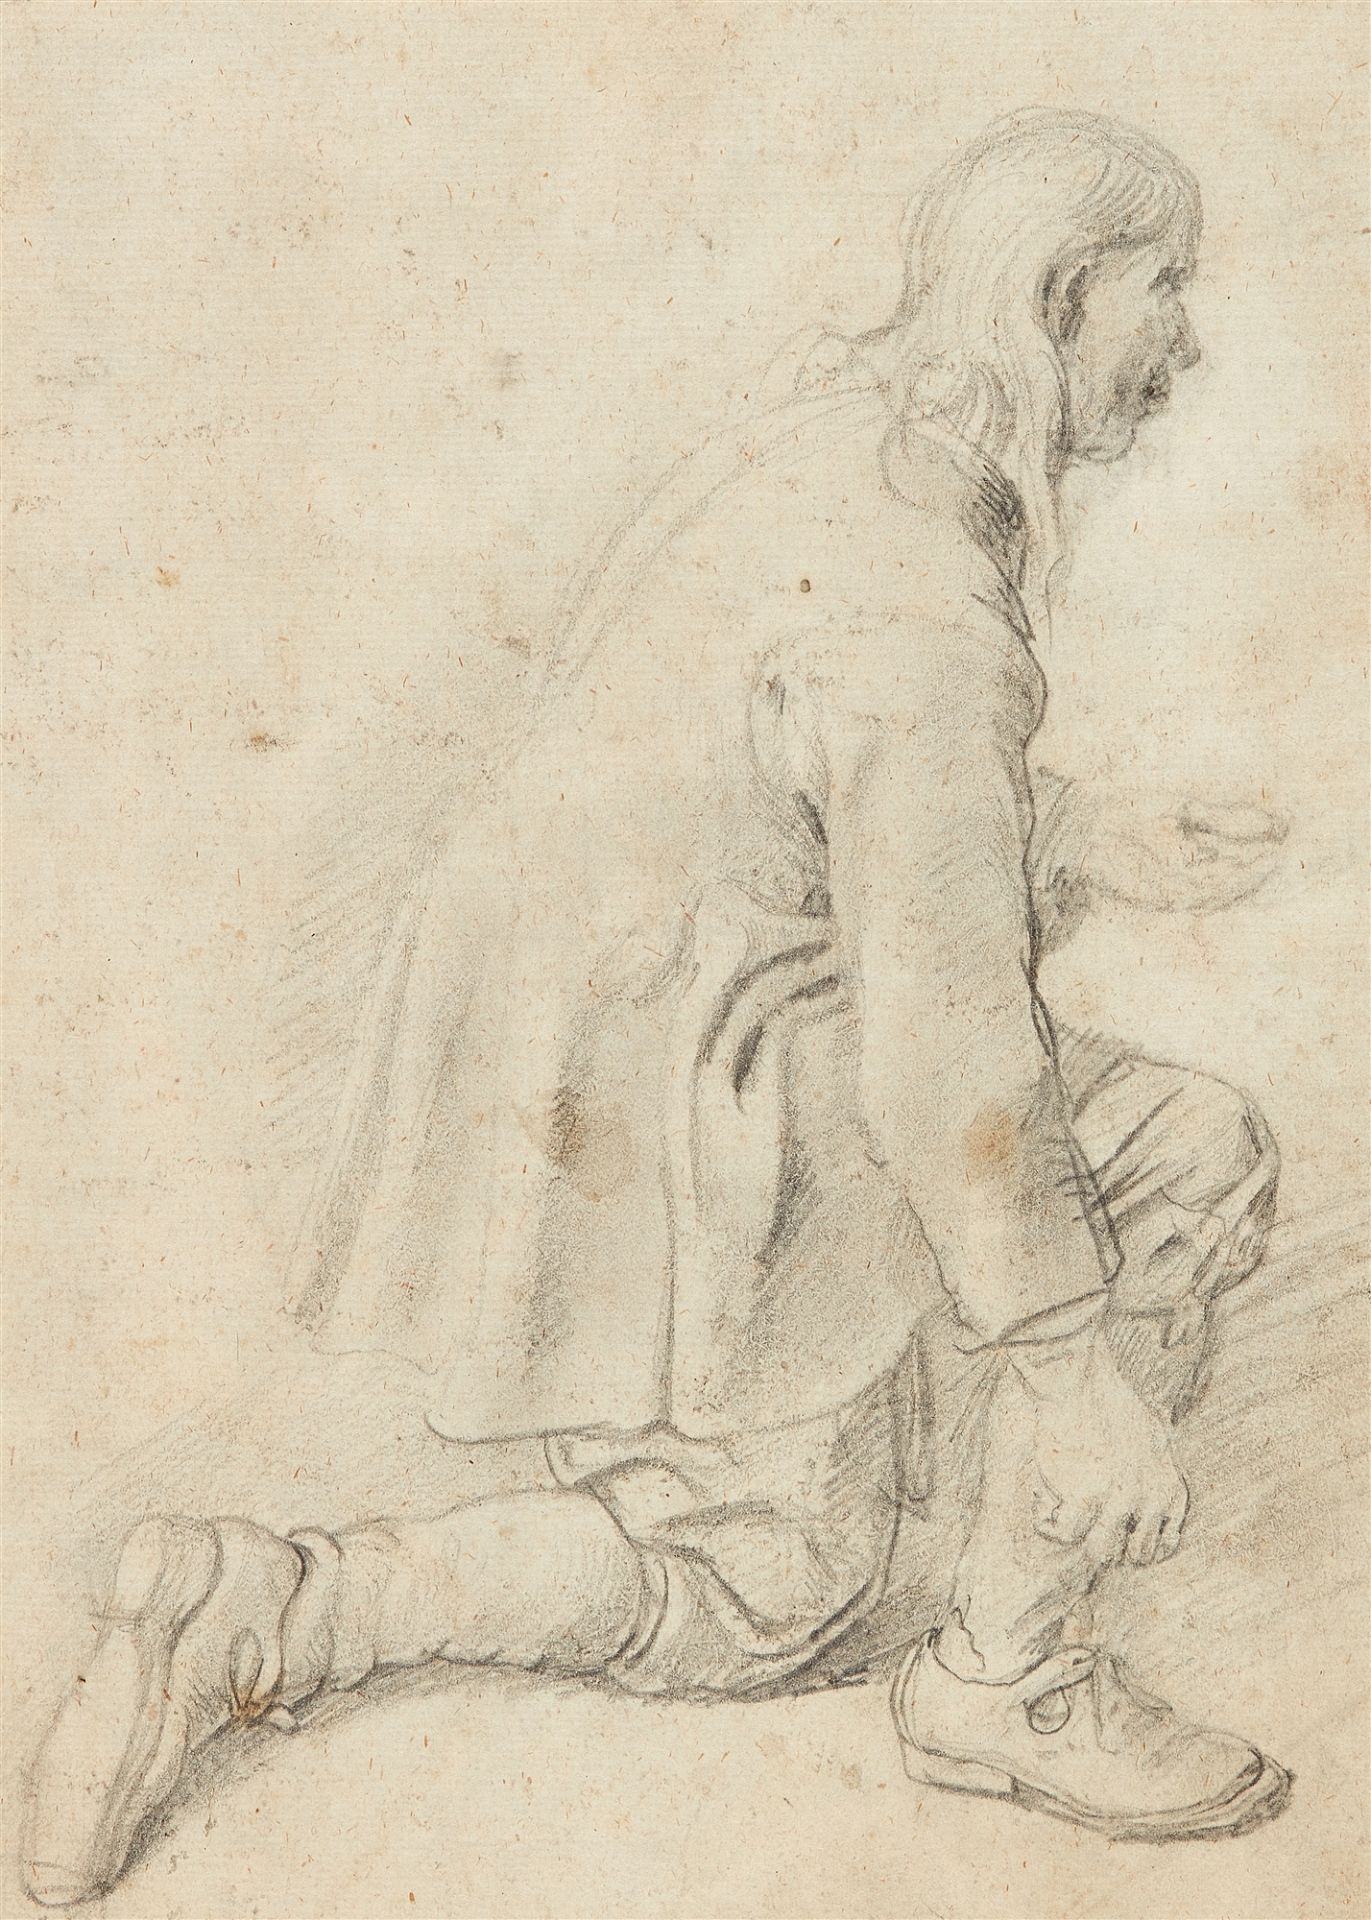 Netherlandish School around 1700, Kneeling Man